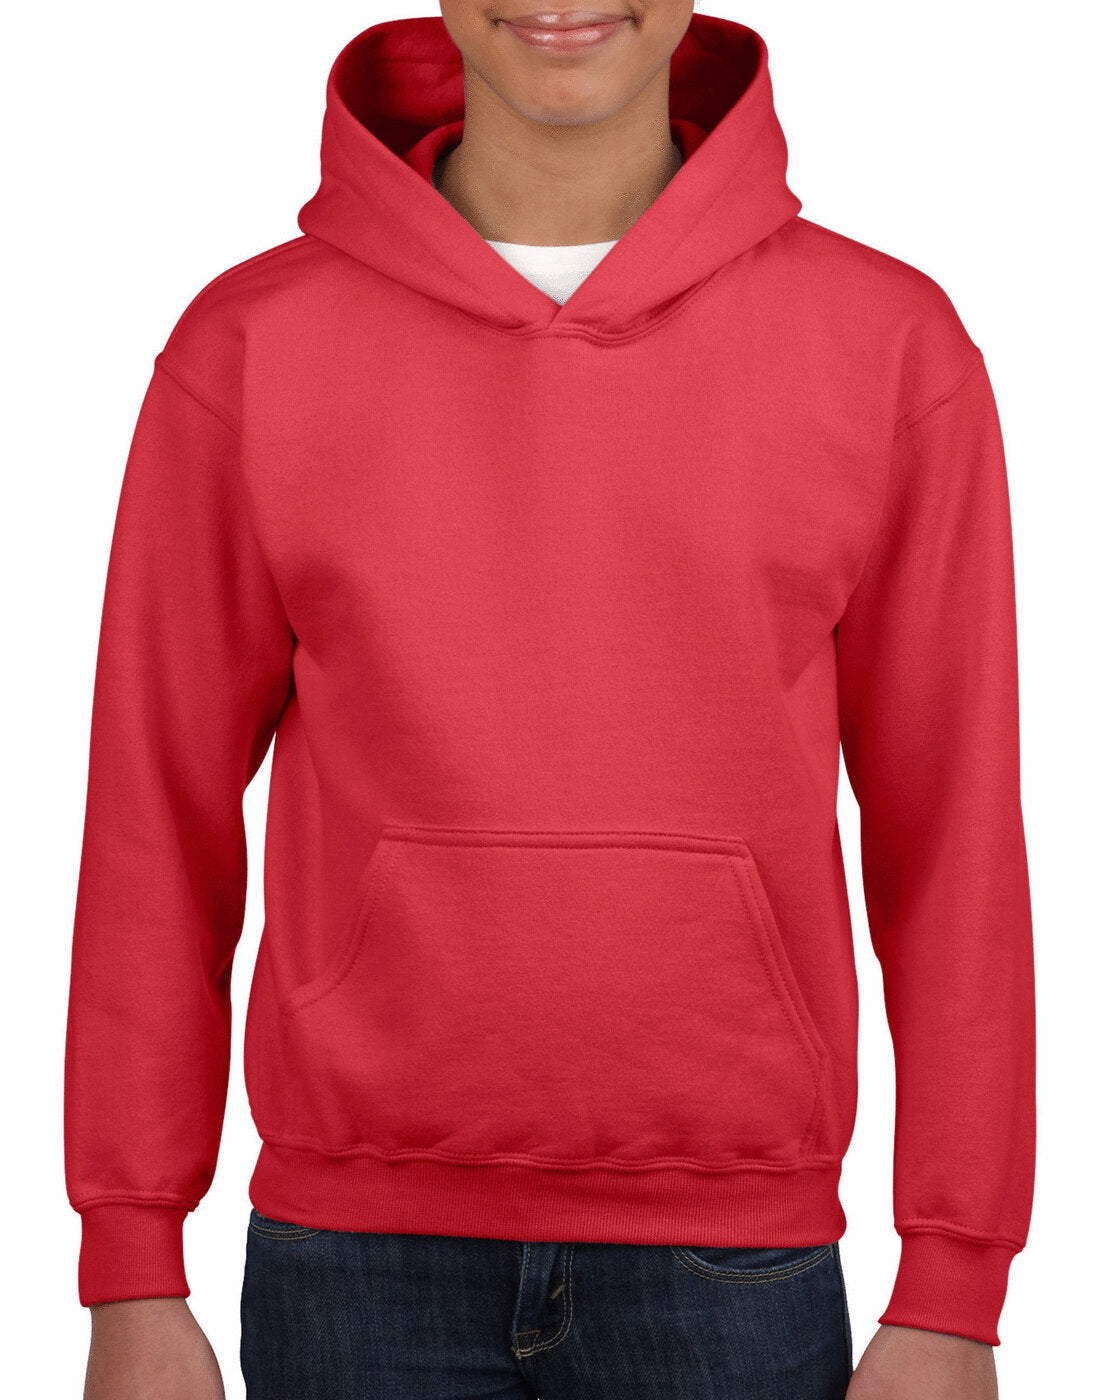 Gildan Kids Heavy Blend Hooded Sweatshirt - Red